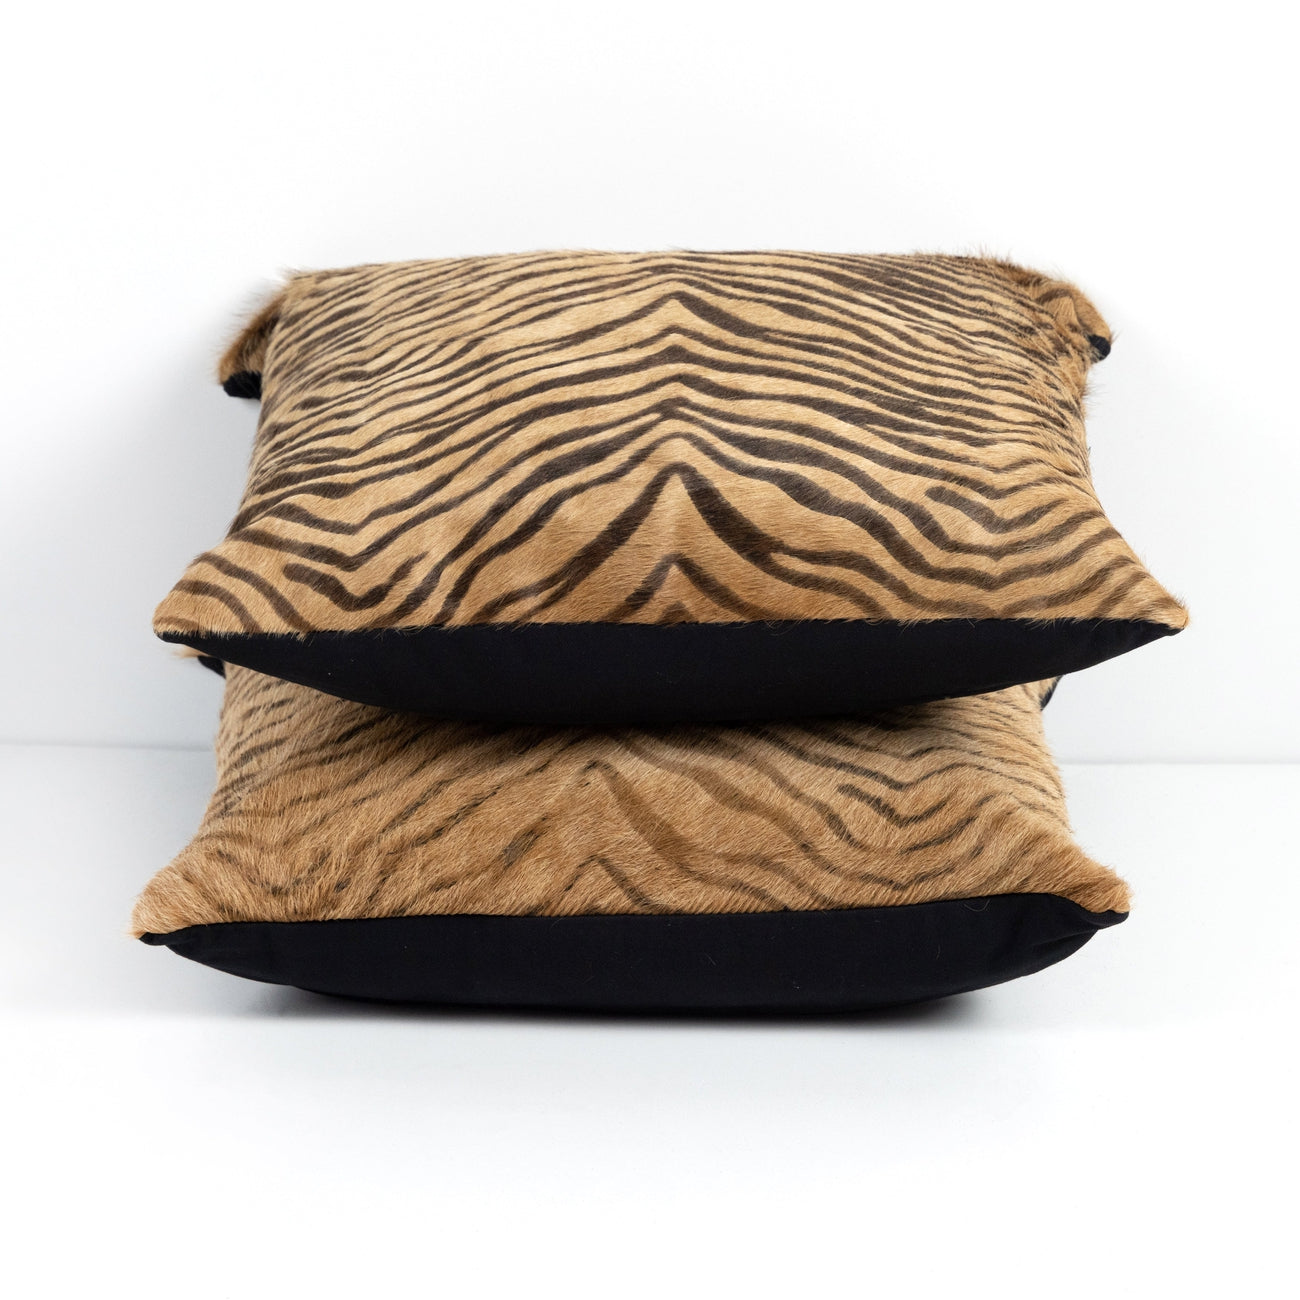 Four Hands, Zebra Printed Hide Pillow-Zebra Hair-S2-20